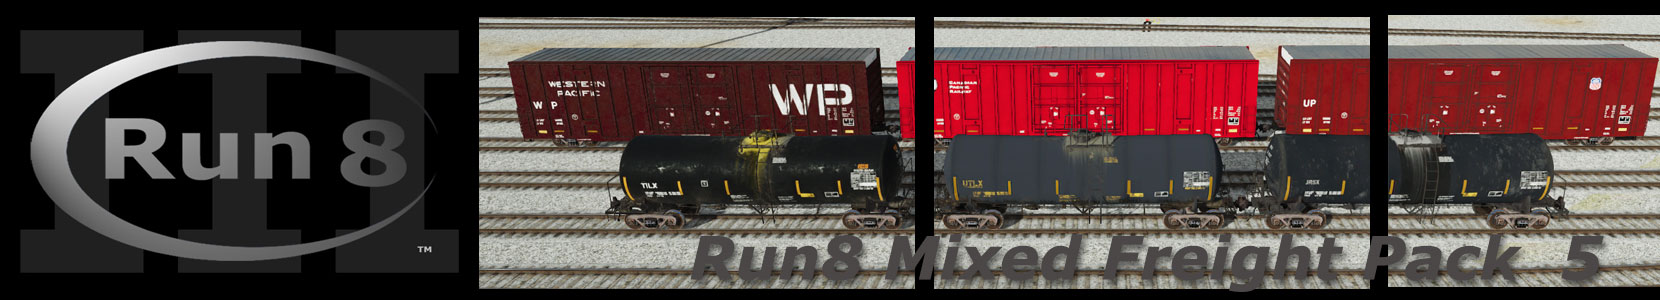 Run8 Train Simulator Mixed Freight Pack 5